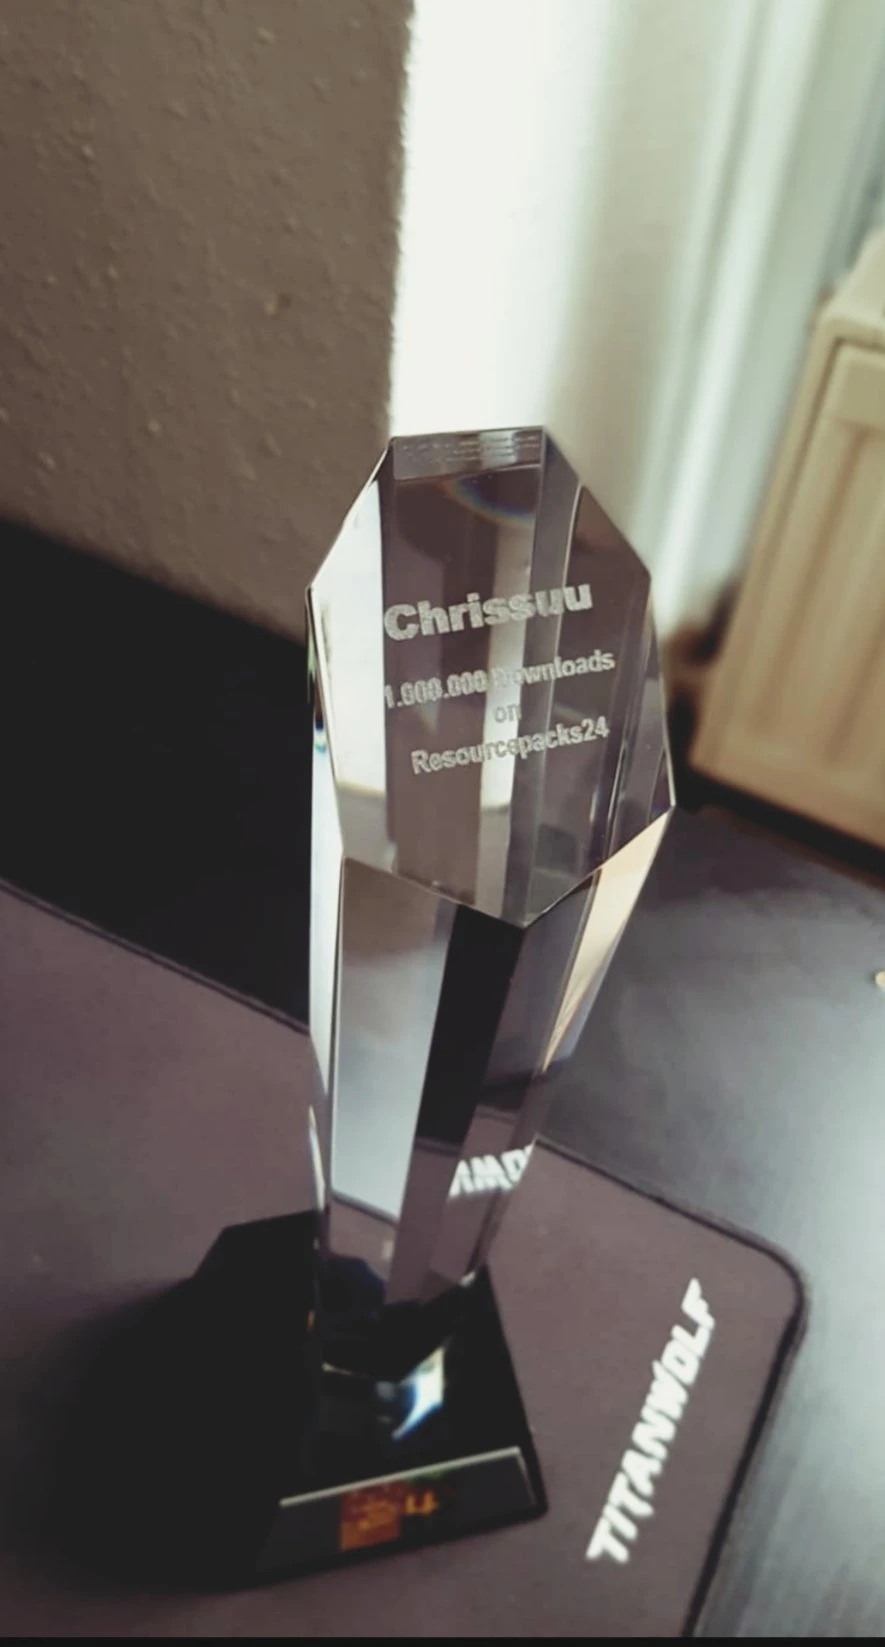 Chrissuu RP24 Award